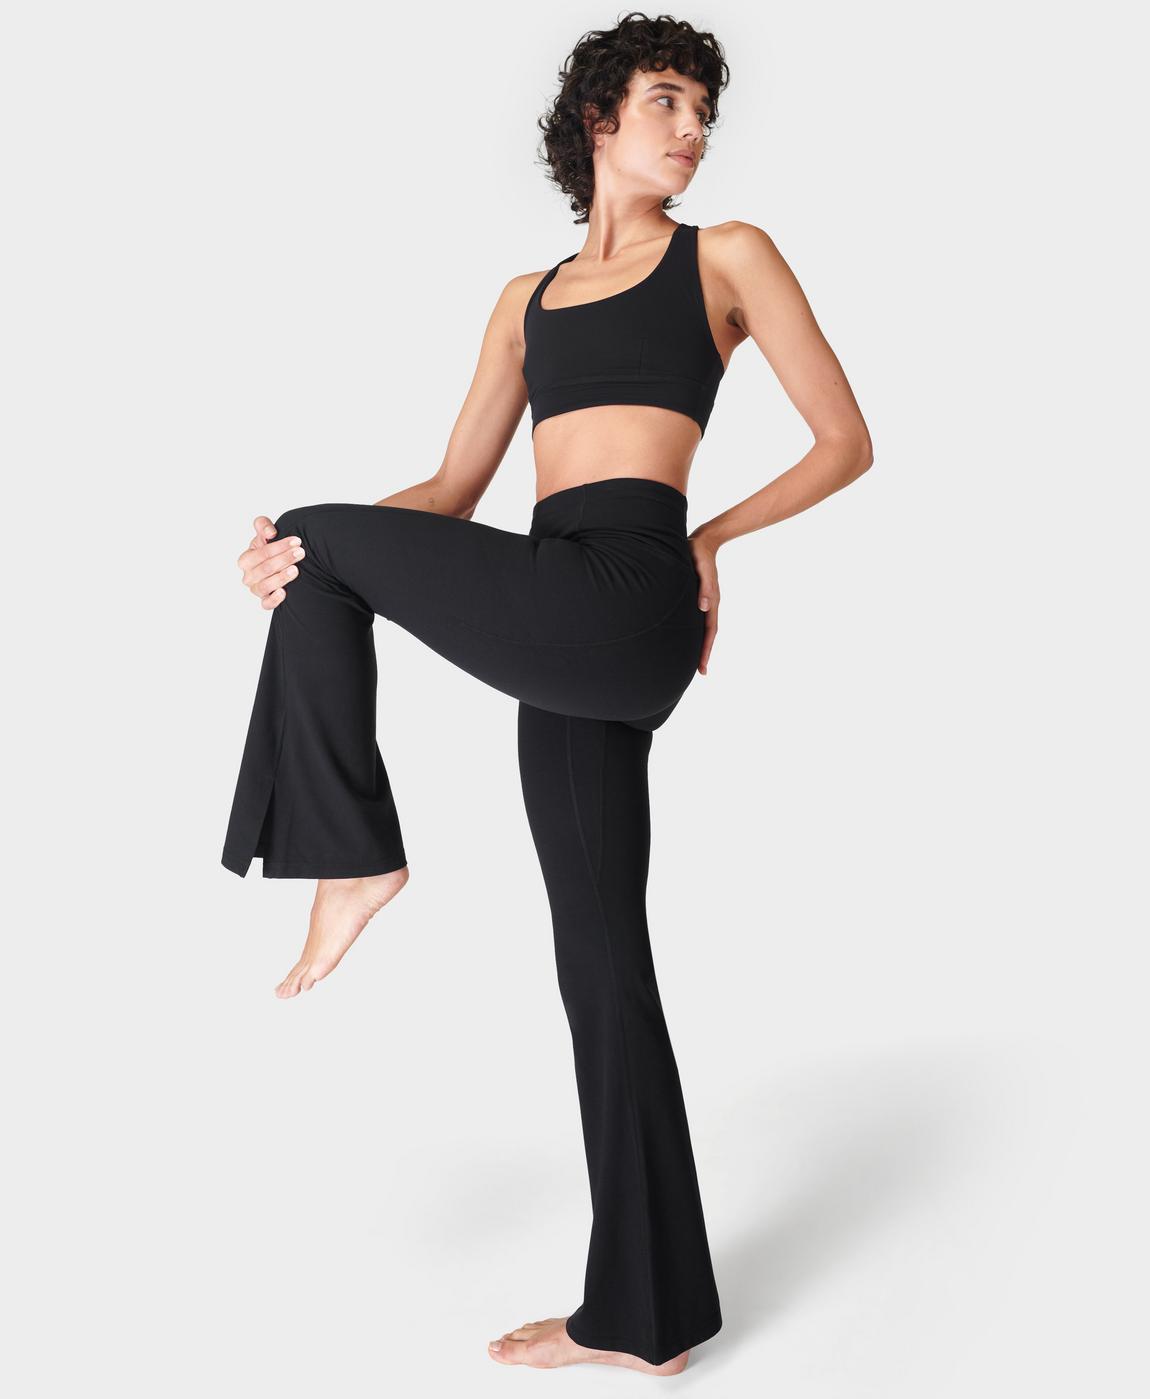 Super Soft Flare Yoga Trousers - Black